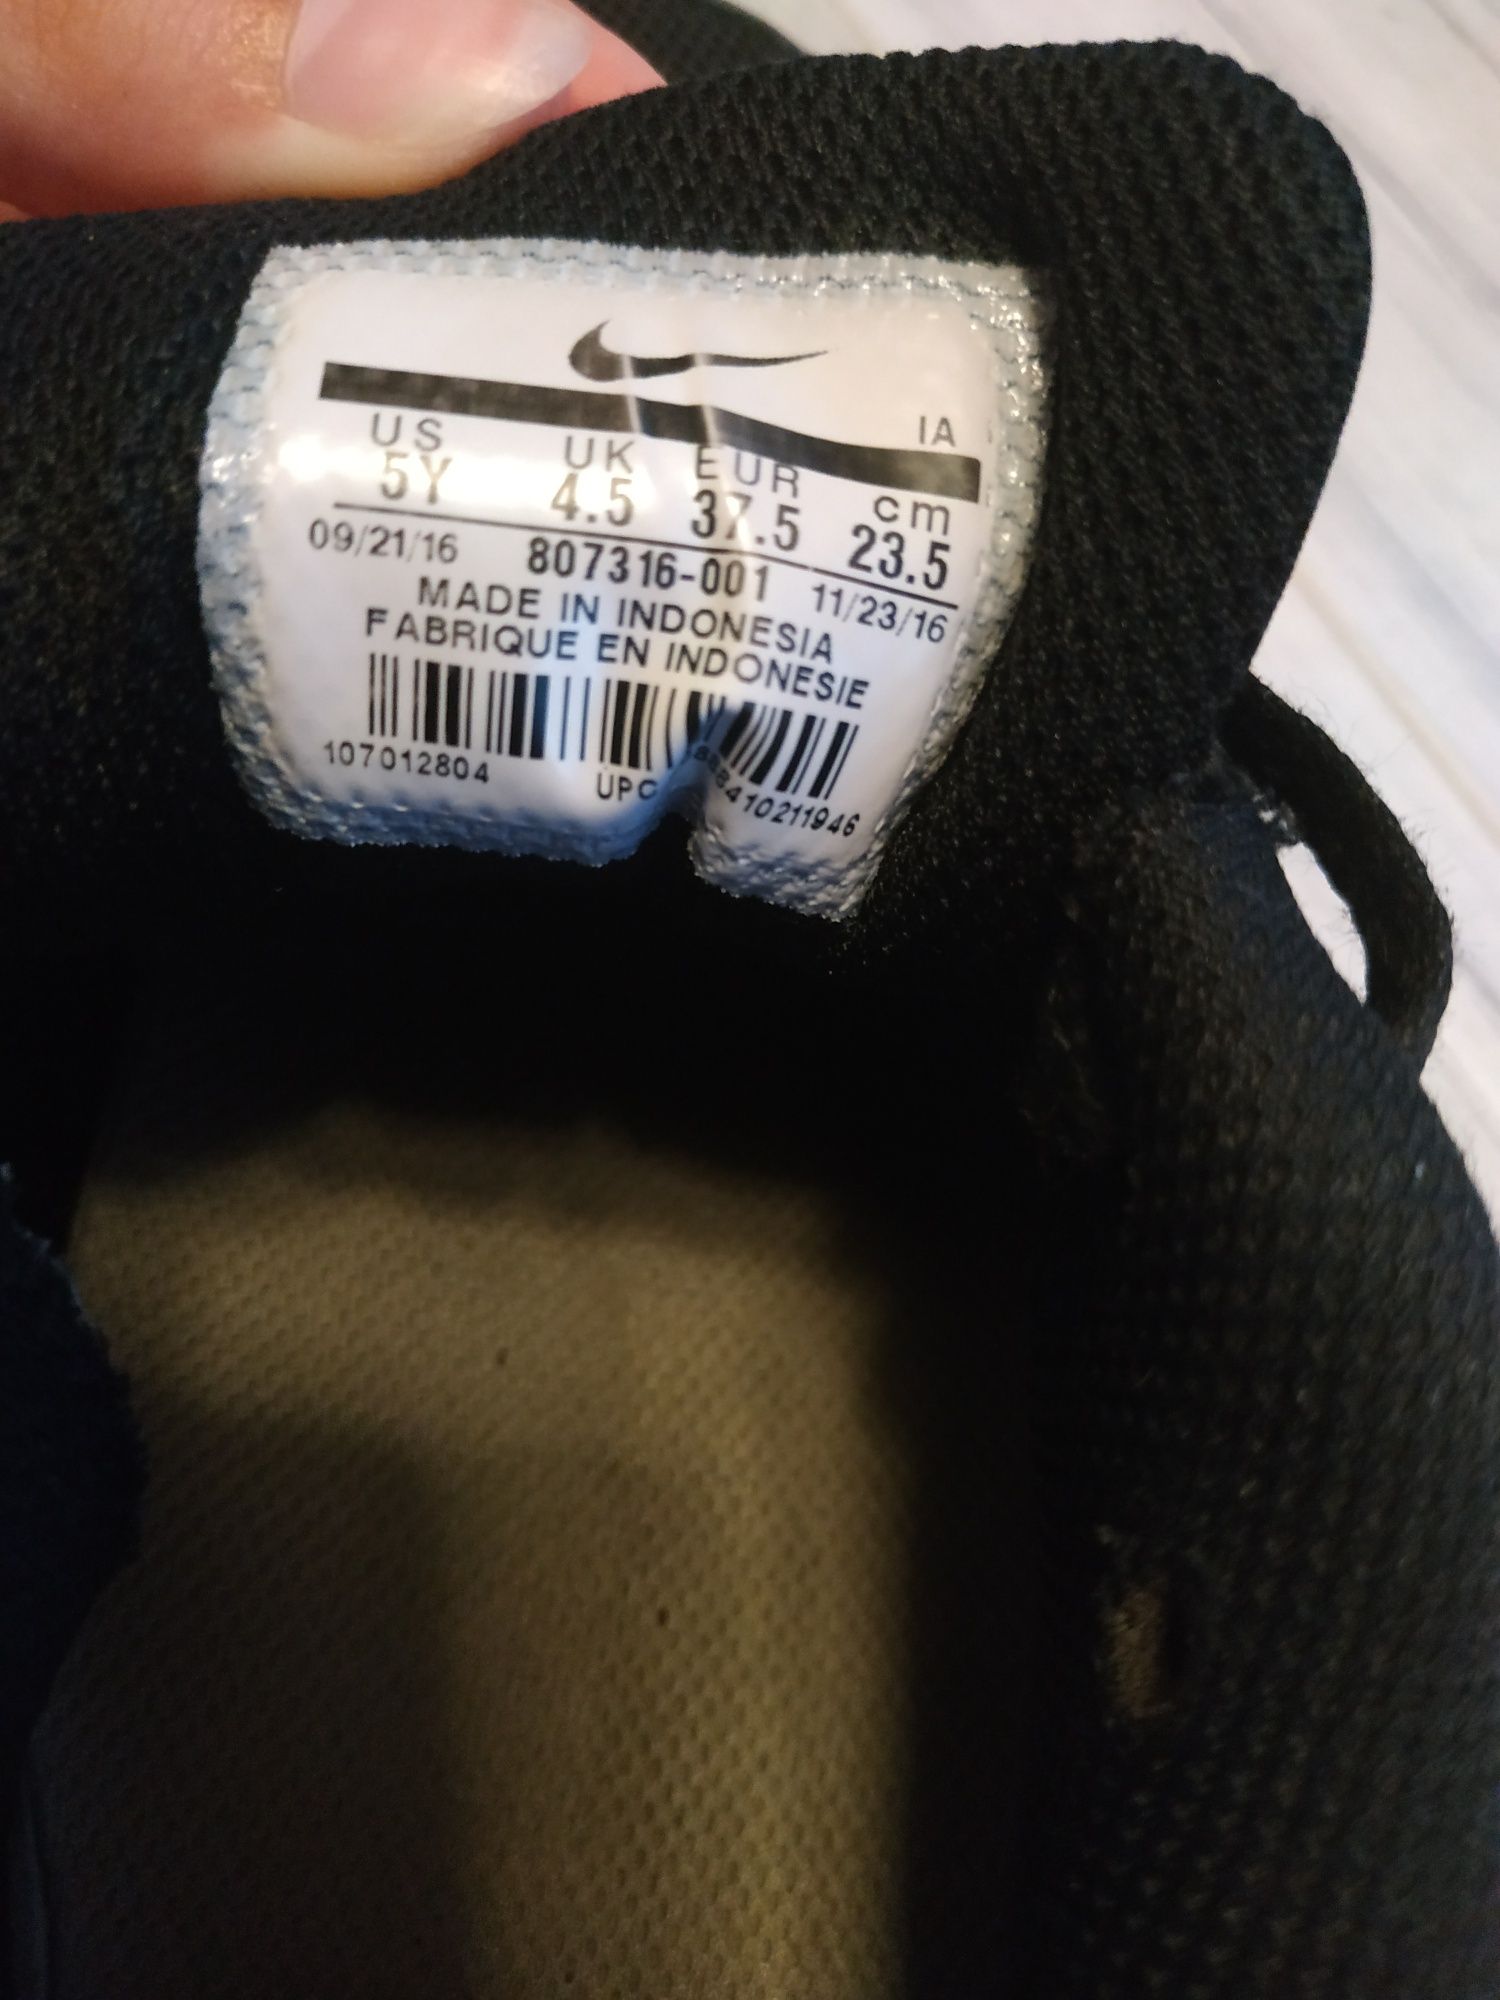 Damskie buty Nike MD RUNNER 2, r.37,5